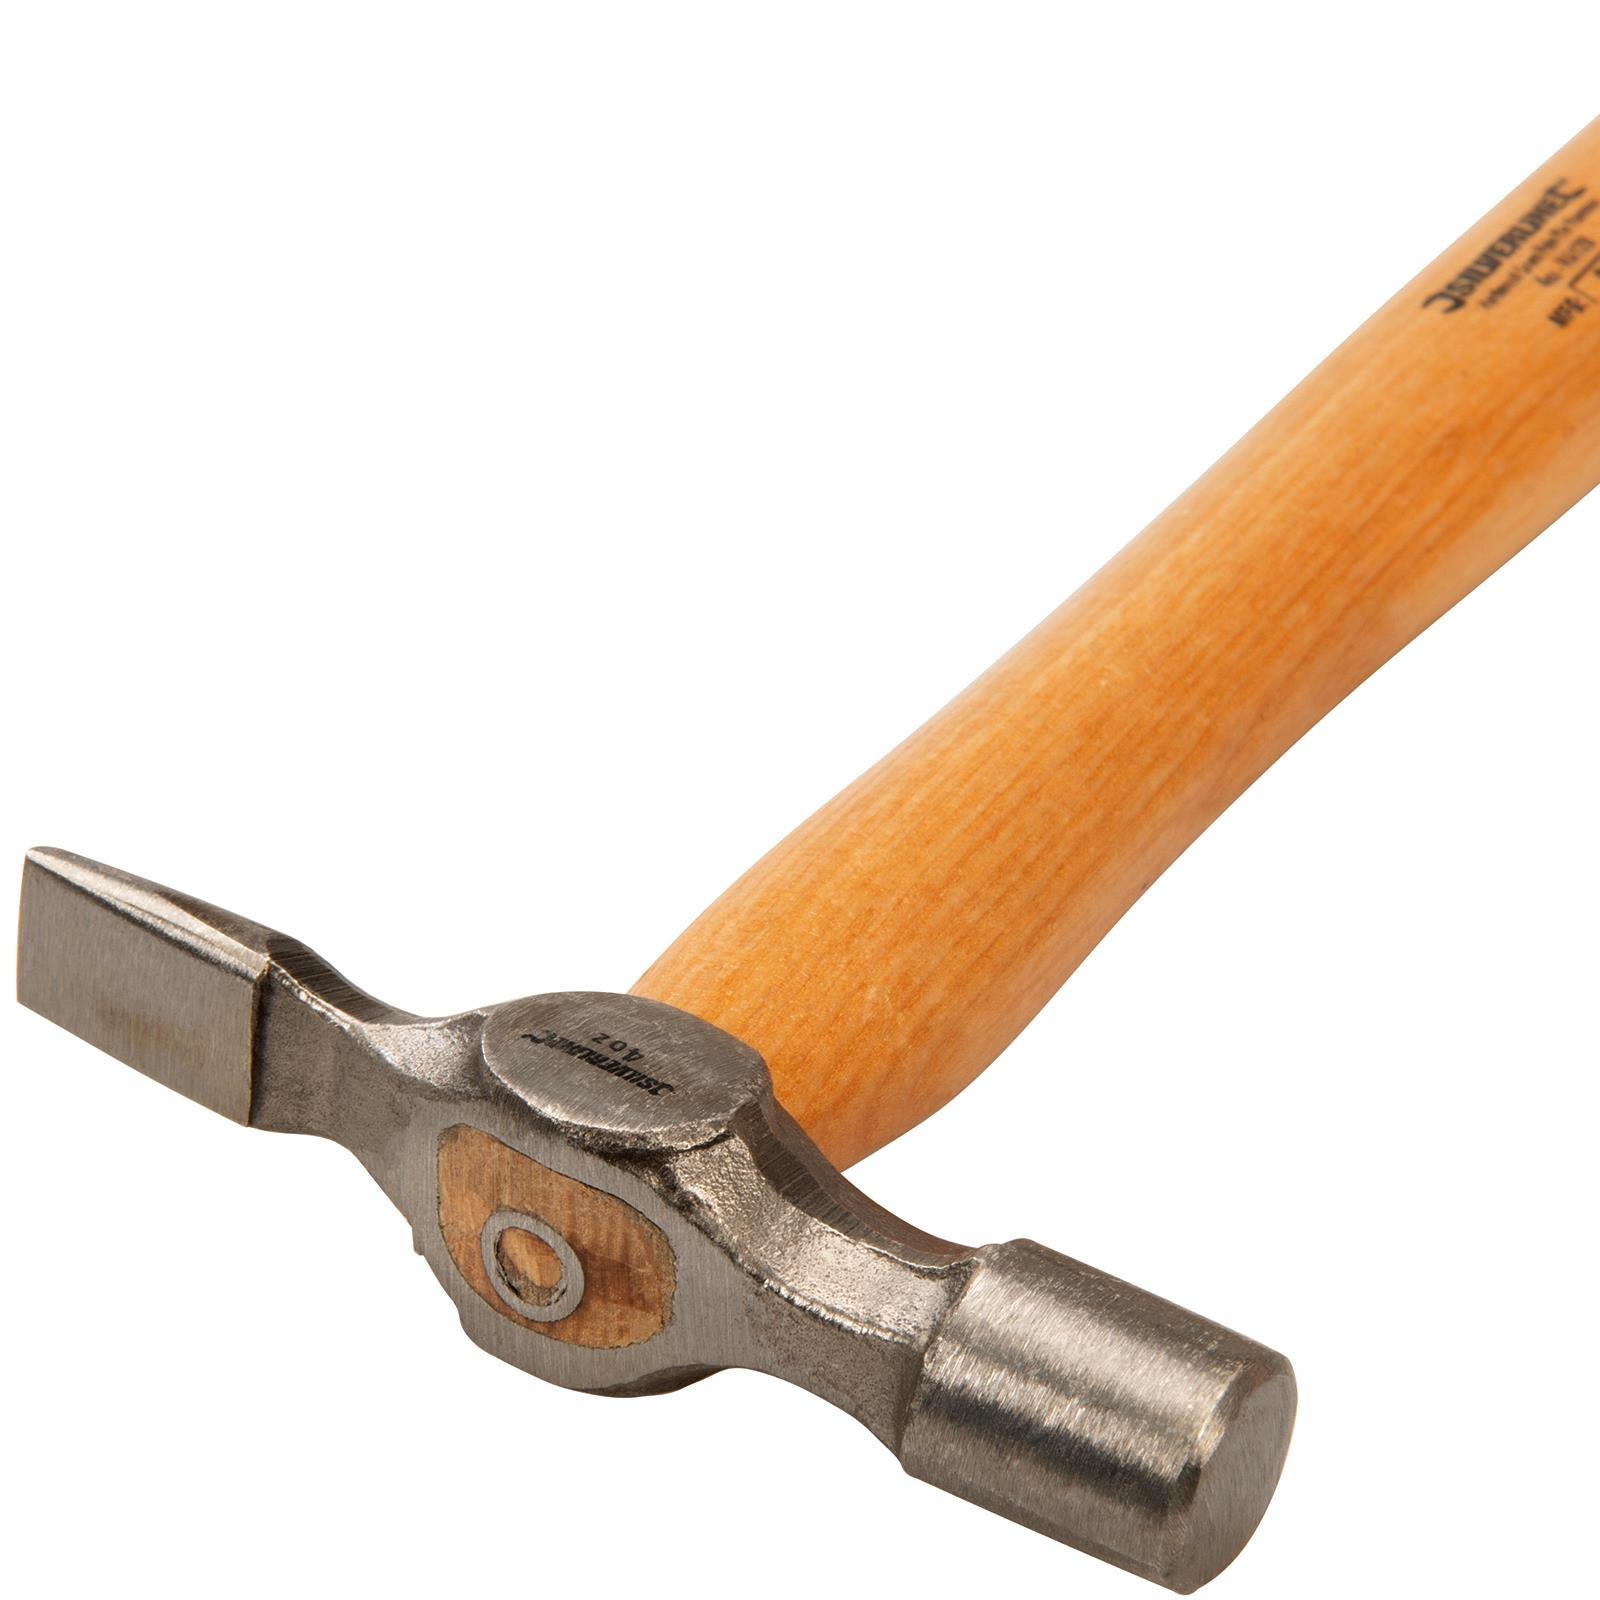 Silverline Hardwood Cross Pein Pin Hammer 4oz Nail Tack Wooden Forged Steel